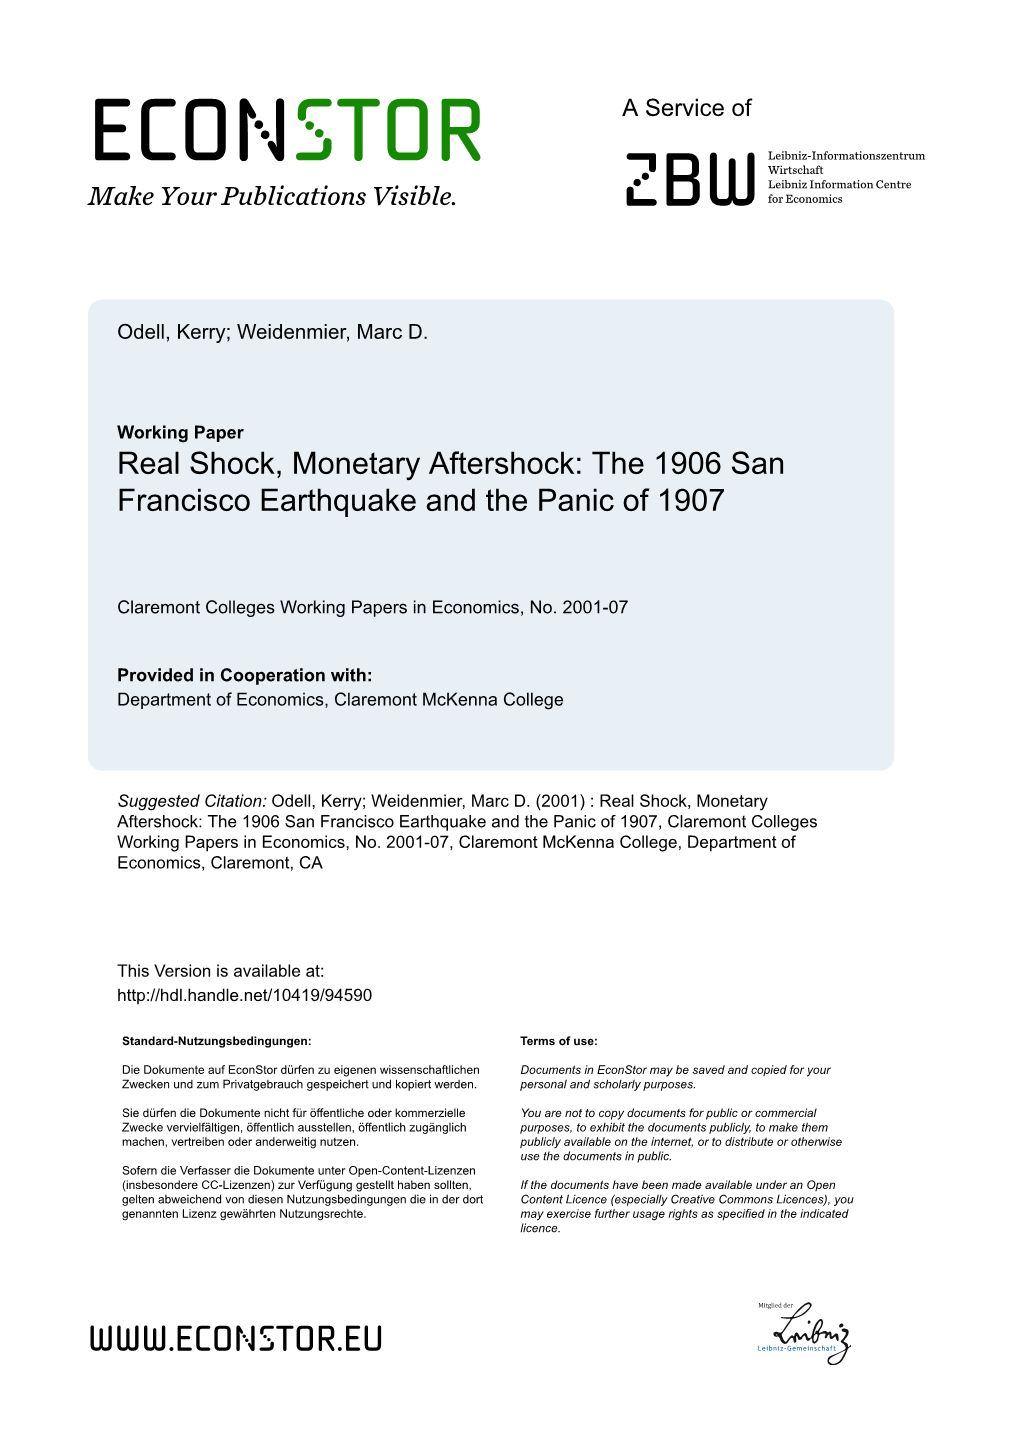 The 1906 San Francisco Earthquake and the Panic of 1907